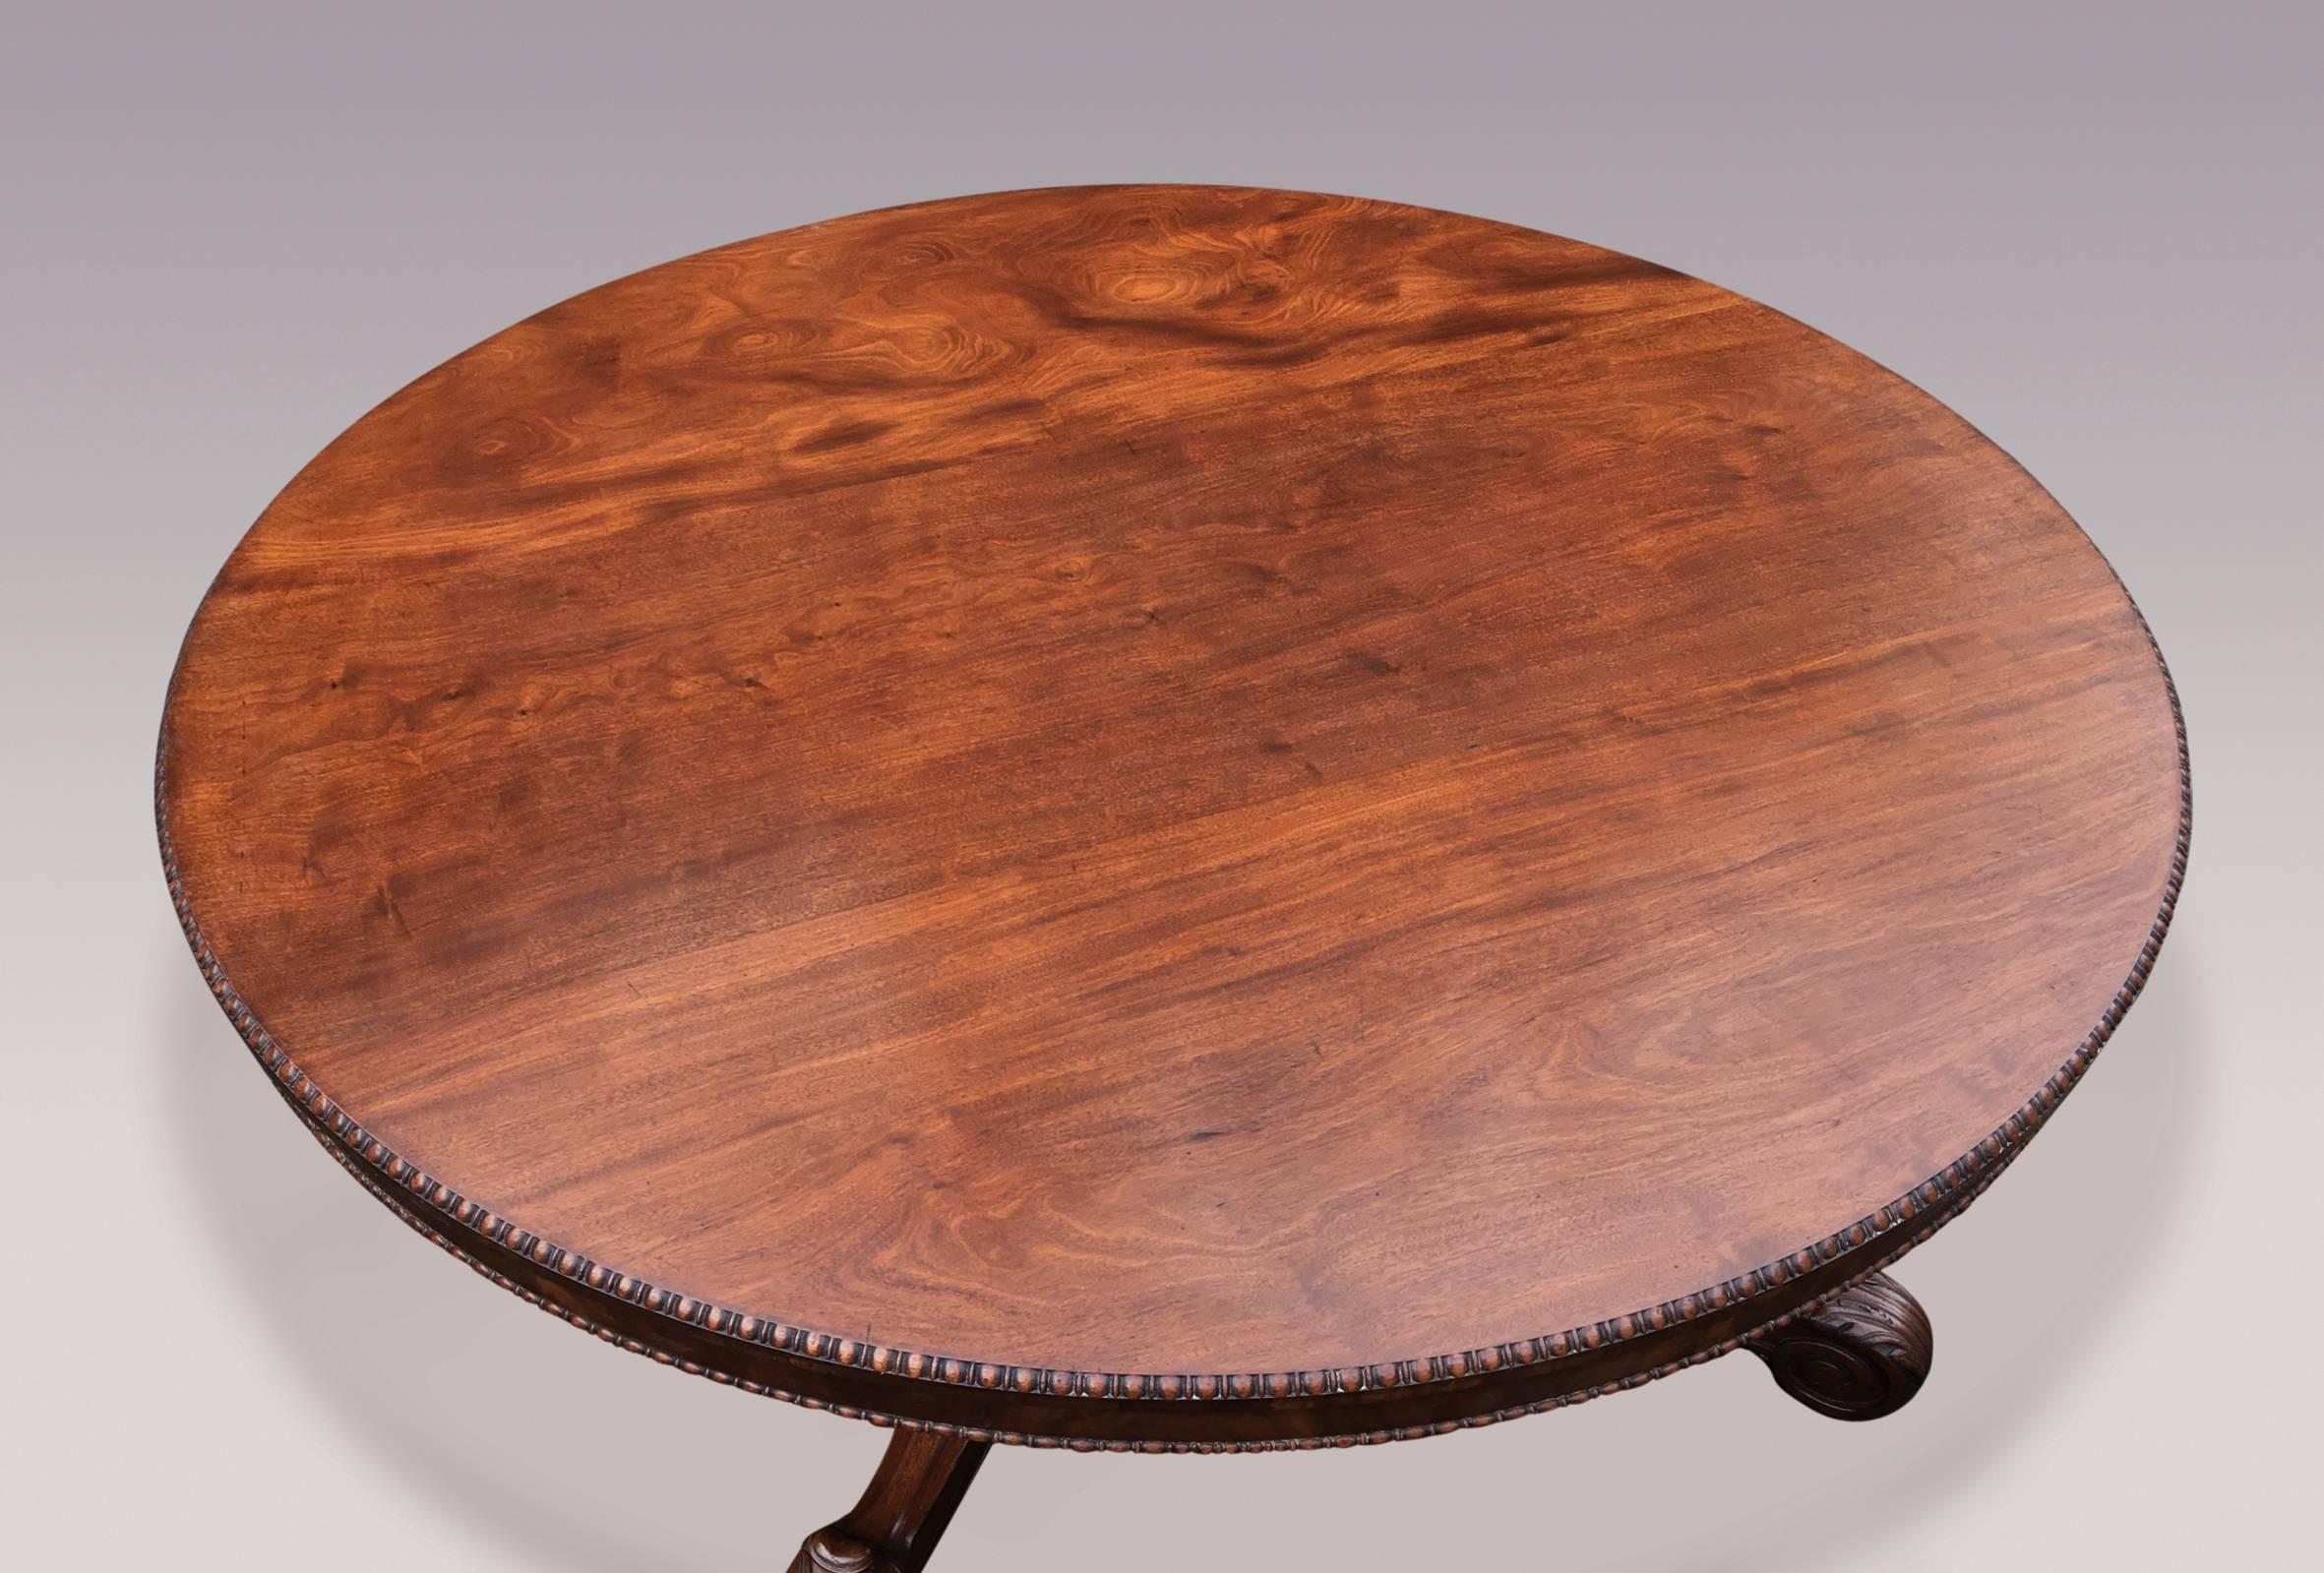 English William IV period mahogany circular dining table